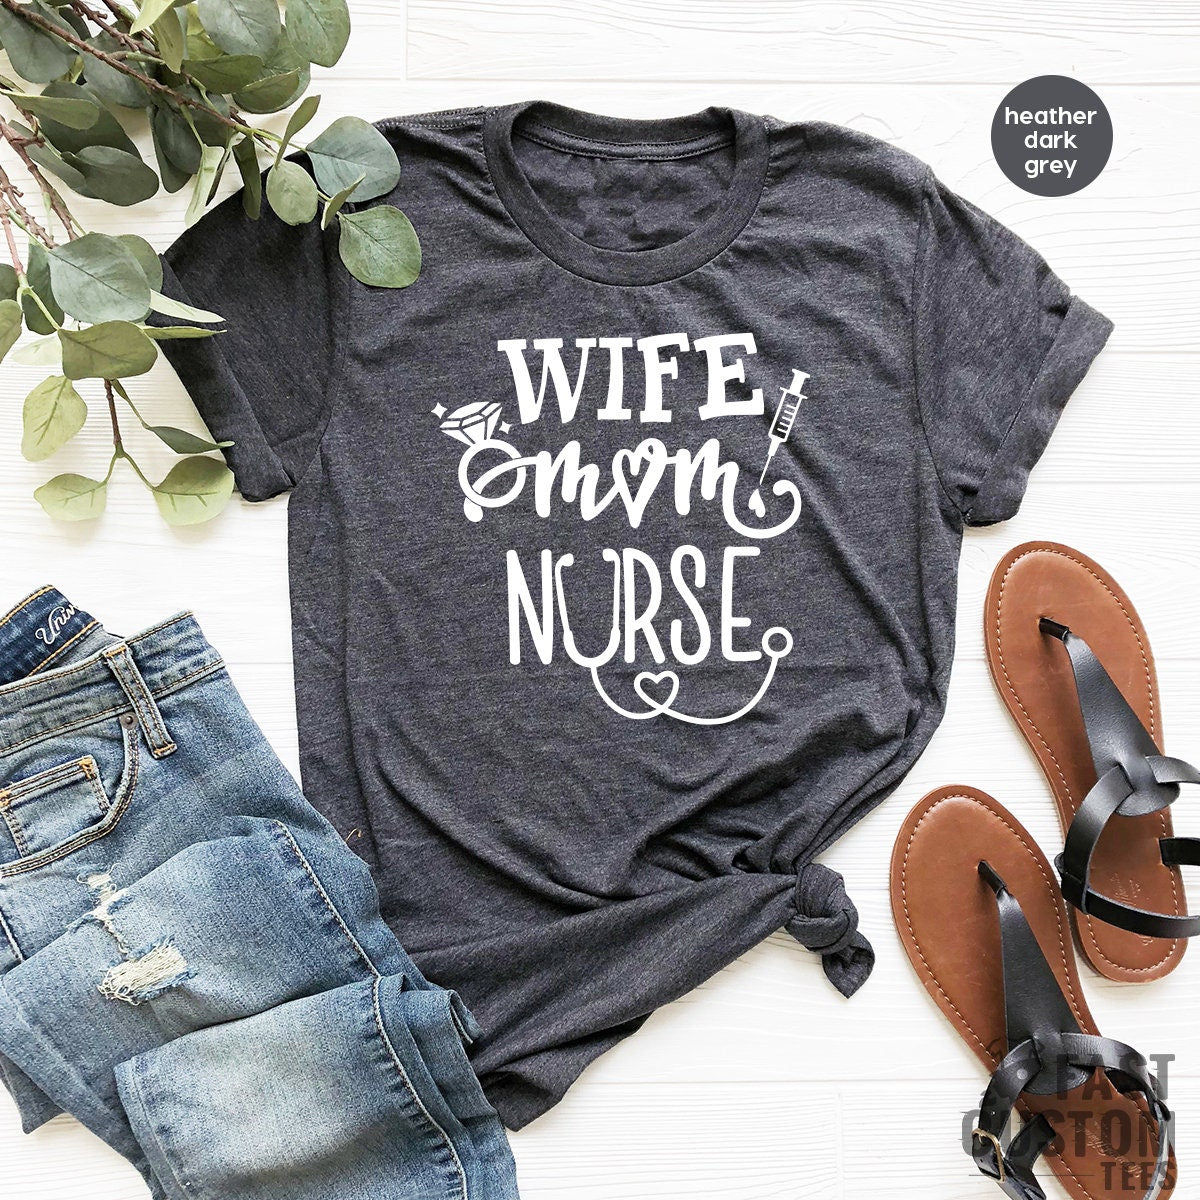 Wife Mom Nurse Shirt, Wife T Shirt, Nursing TShirt, Nurse Tee, Gift For Nurse Mom, Nursing Mom Shirt, Mothers Day Shirts, Mom T Shirt - Fastdeliverytees.com